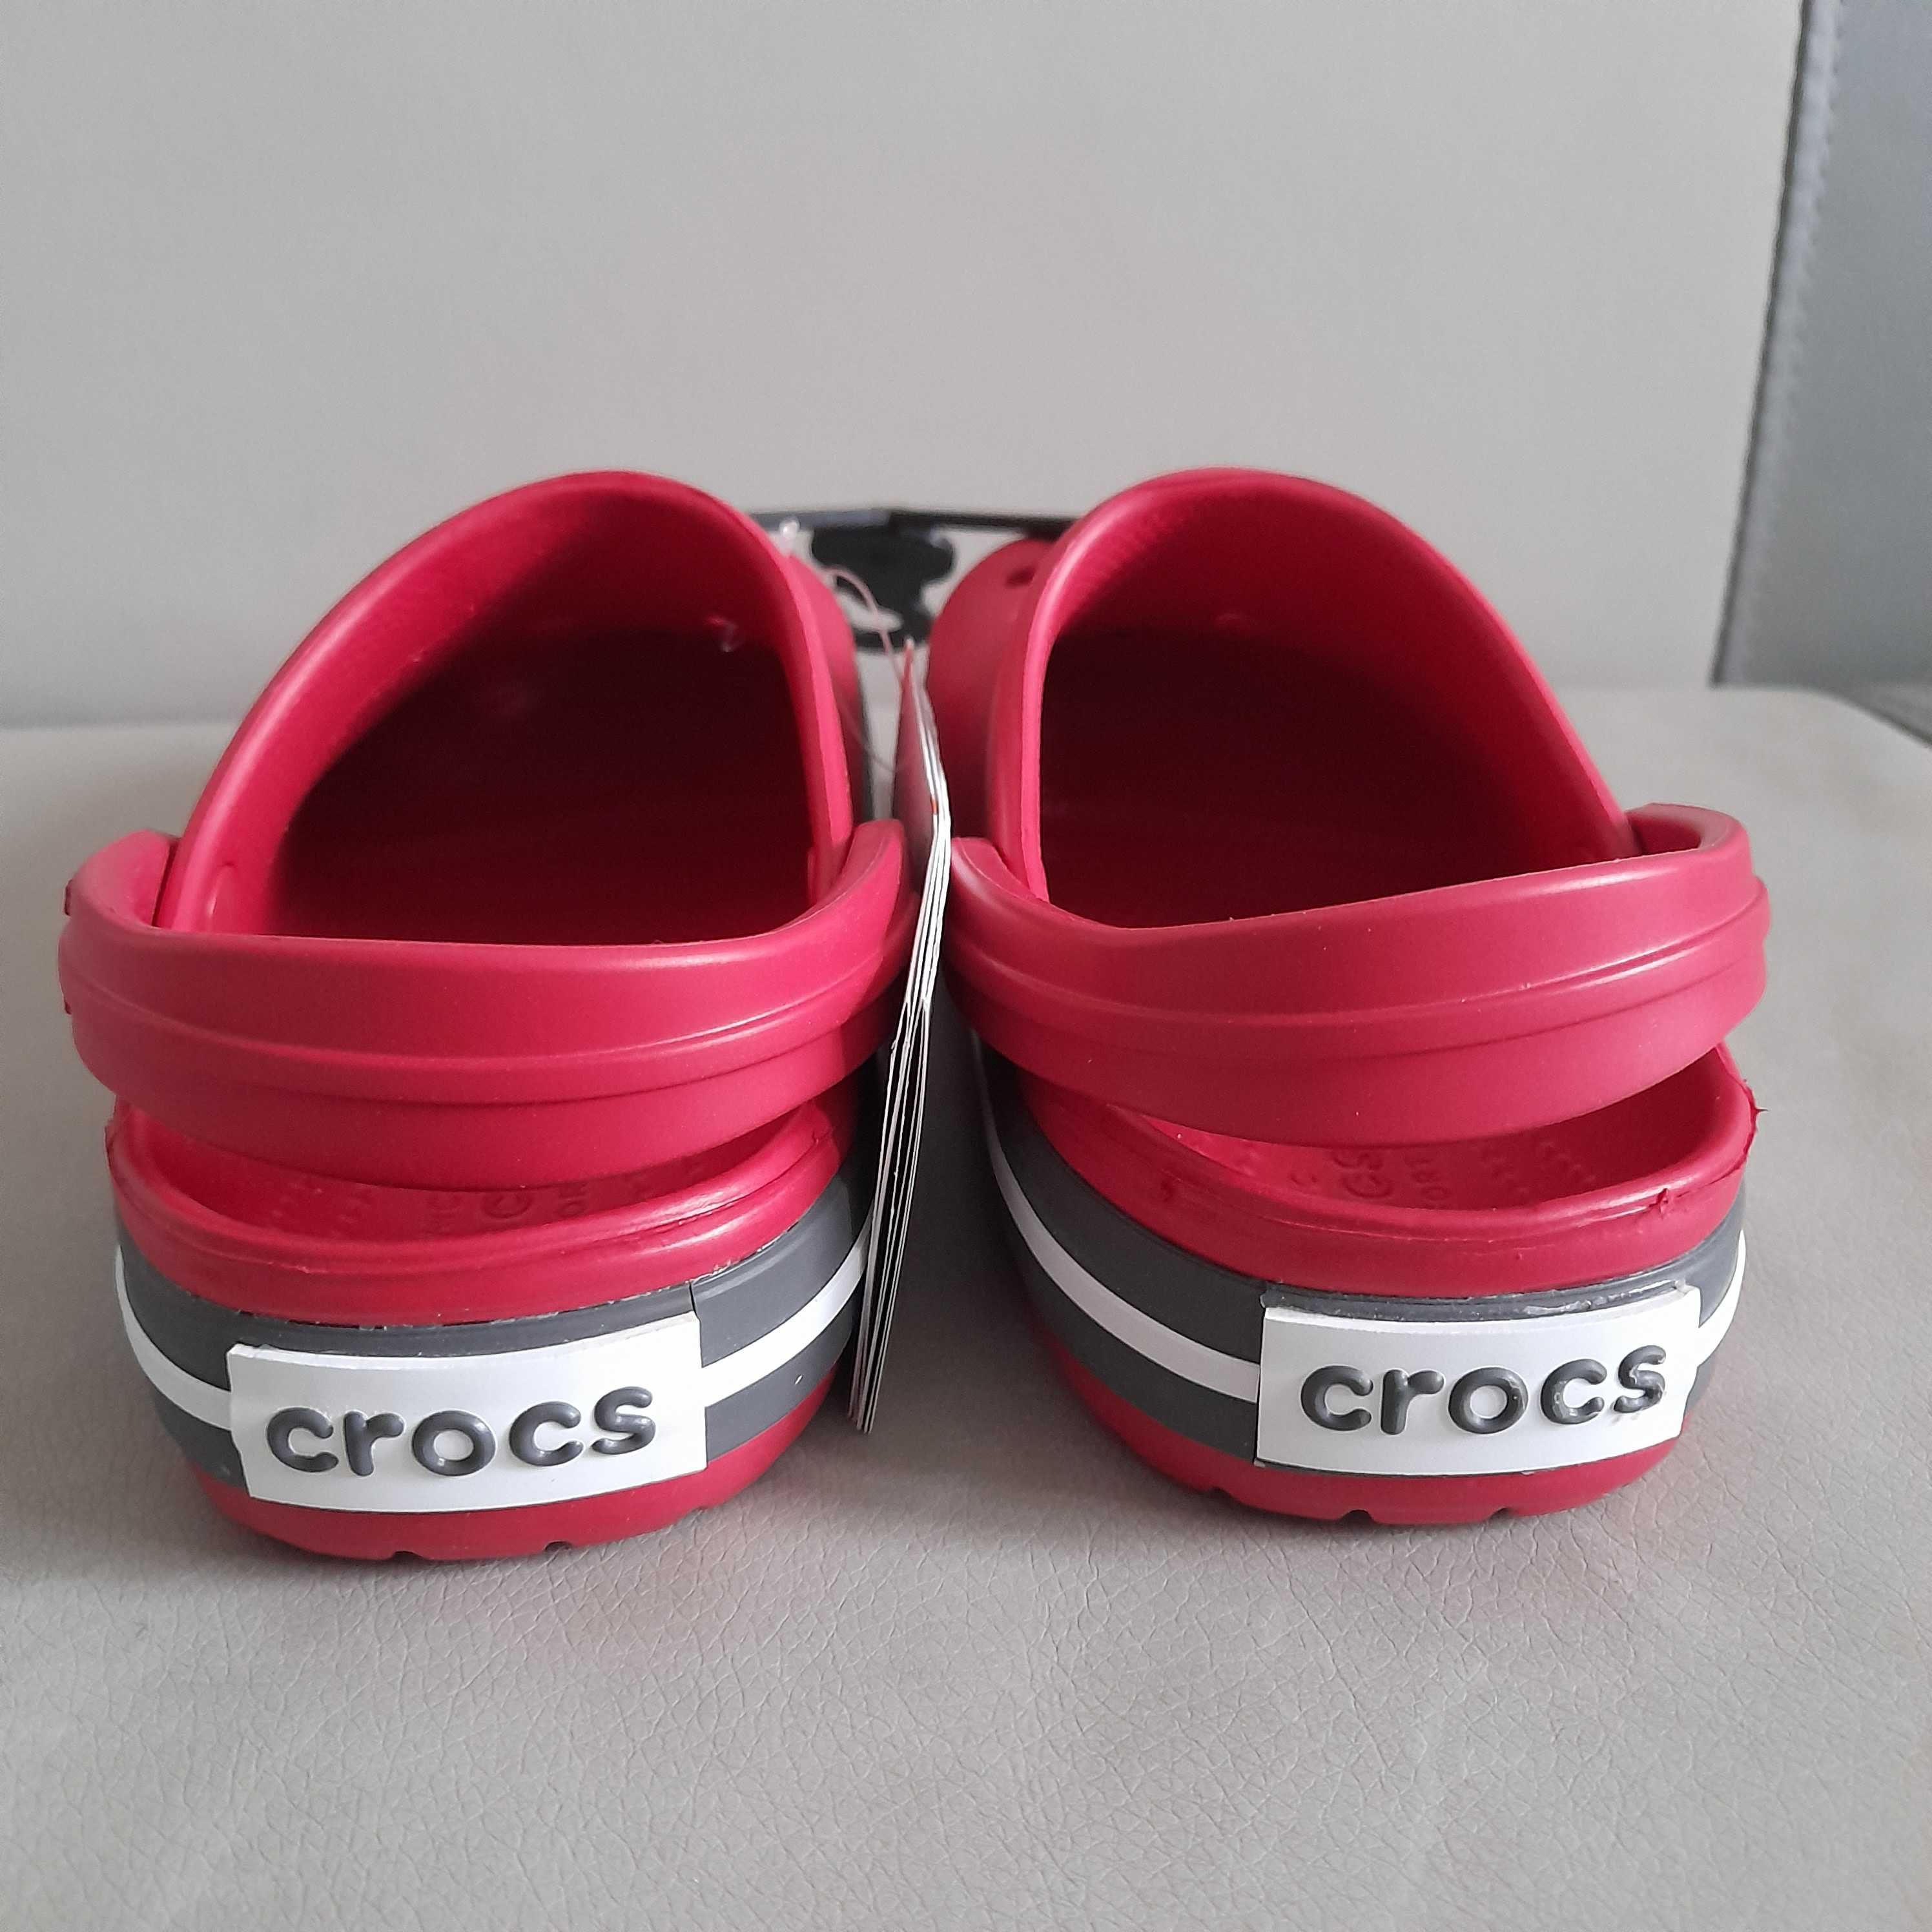 Кроксы, крокси Crocs Crocband р. с10/27-28/17,5см. Нові. Оригинал